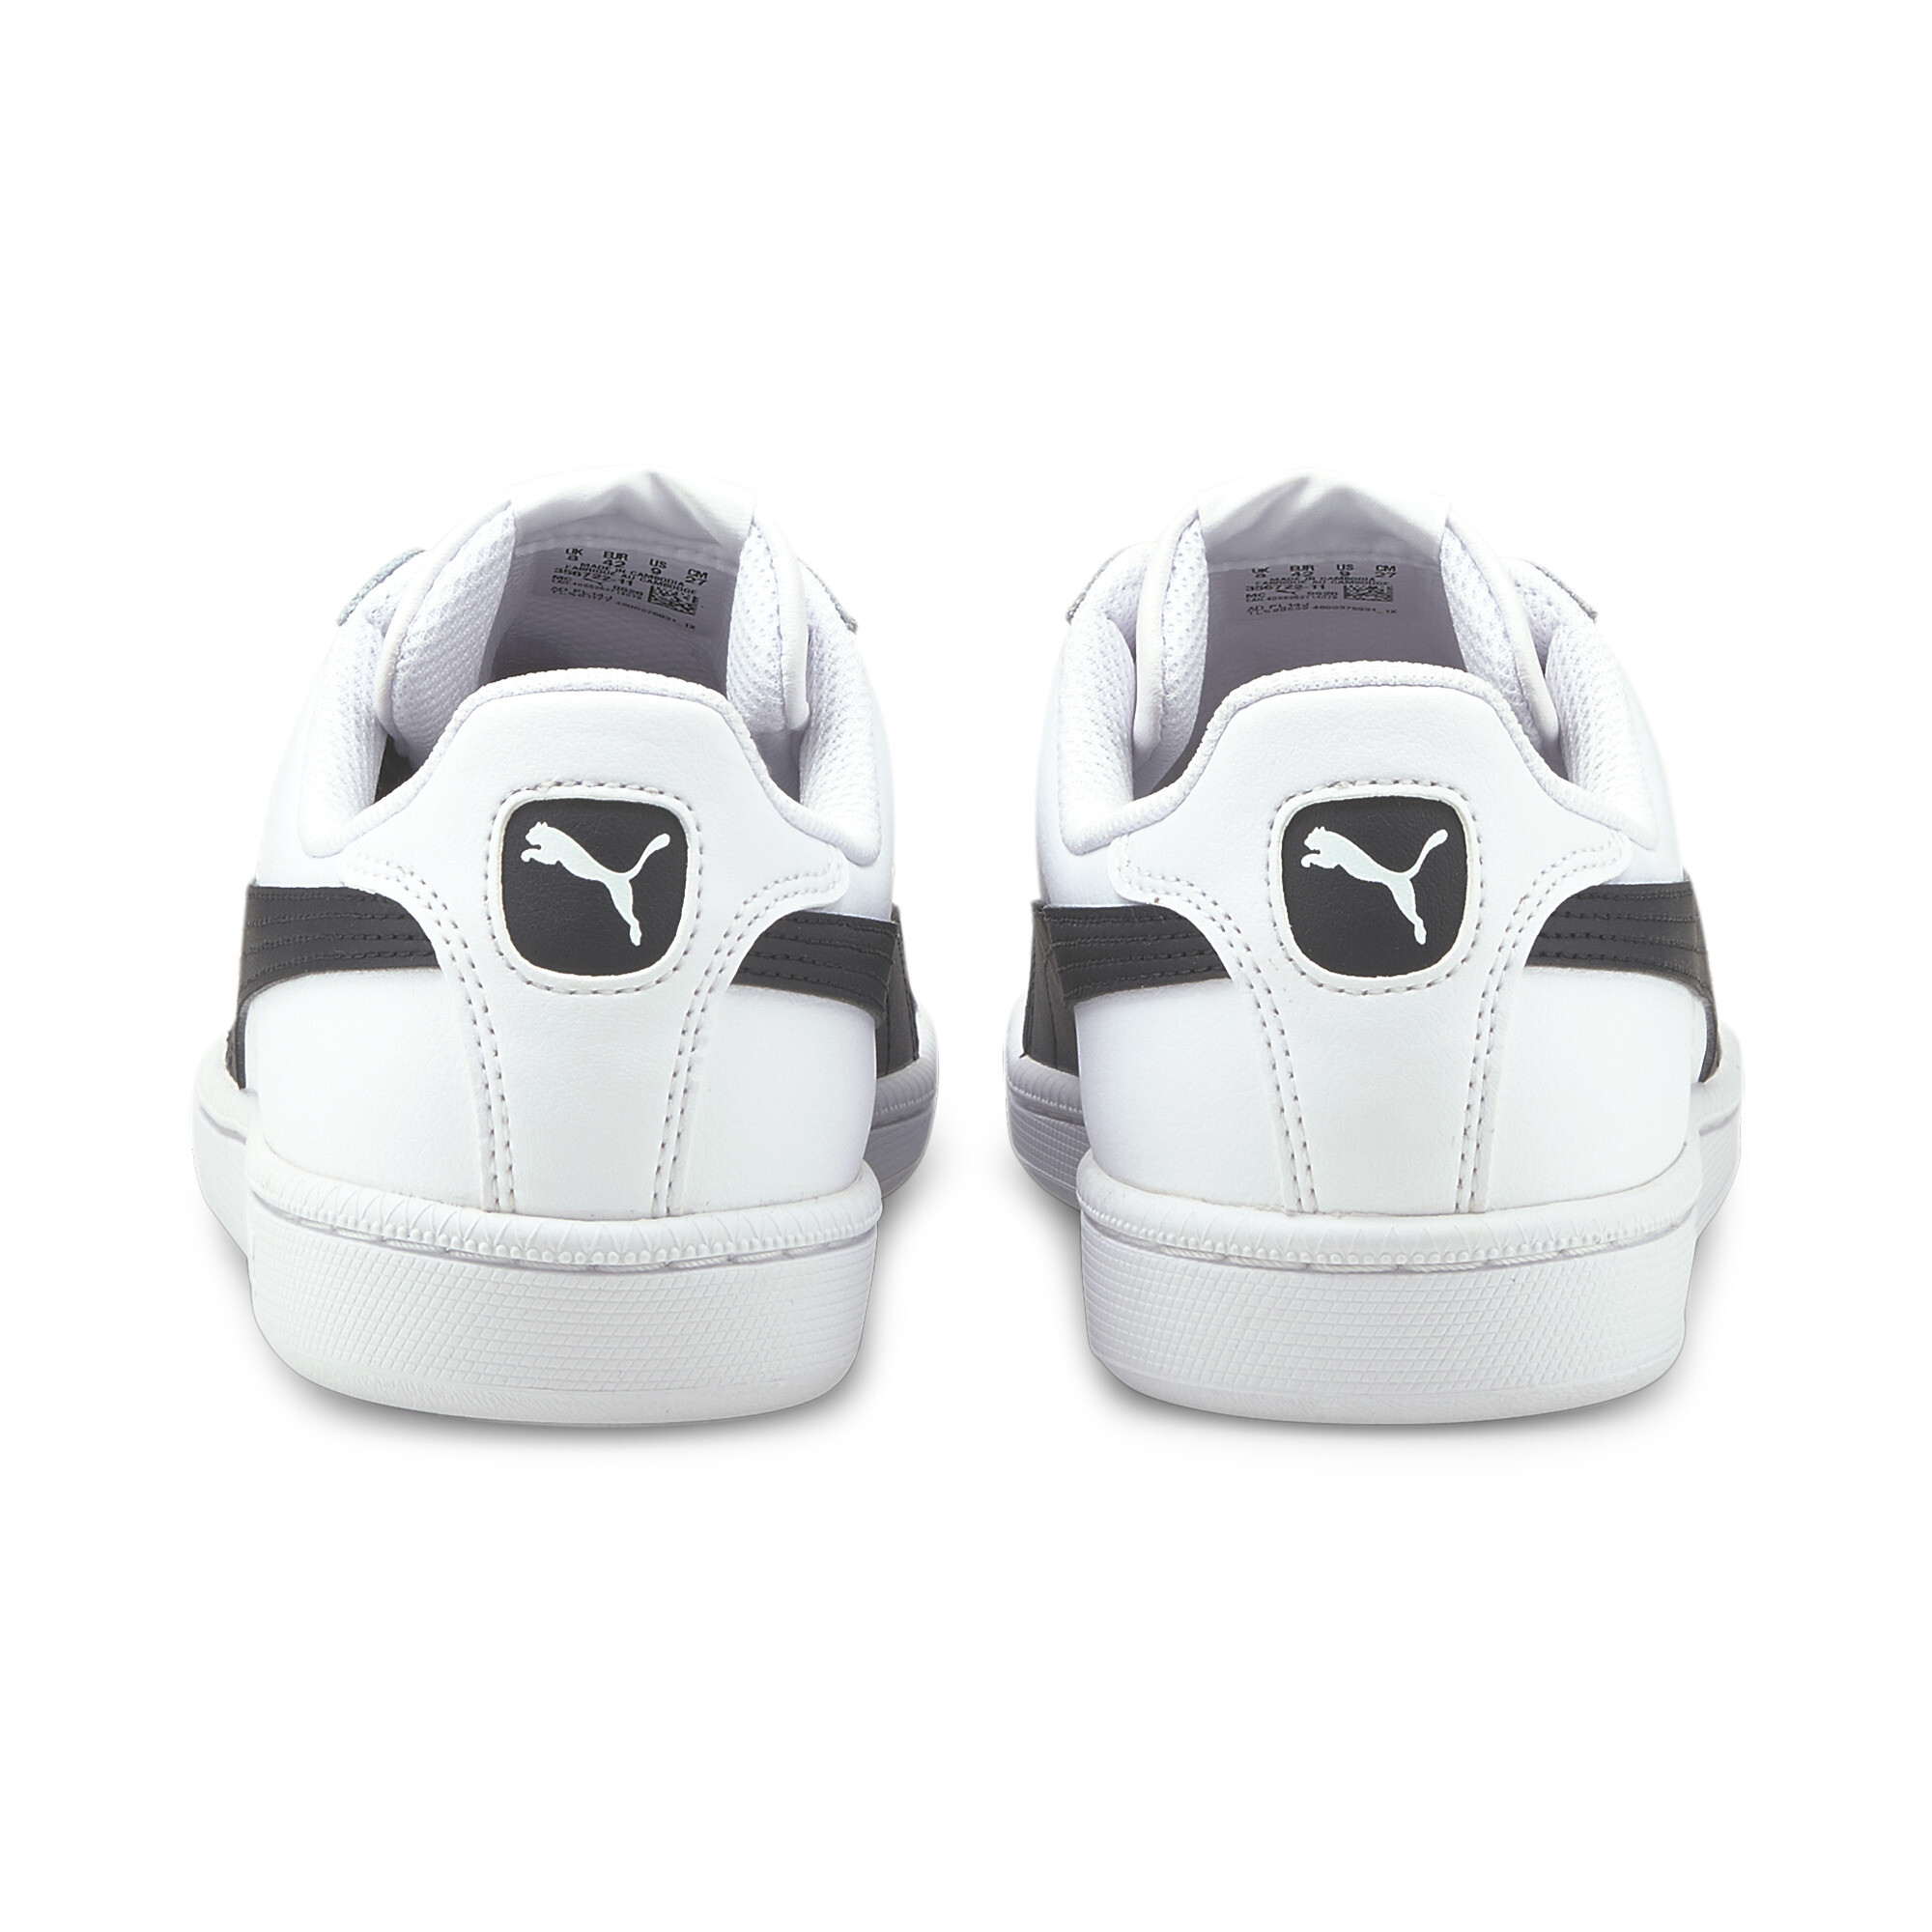 Indexbild 8 - PUMA Smash Trainers Schuhe Sneakers Sport Classics Unisex Neu